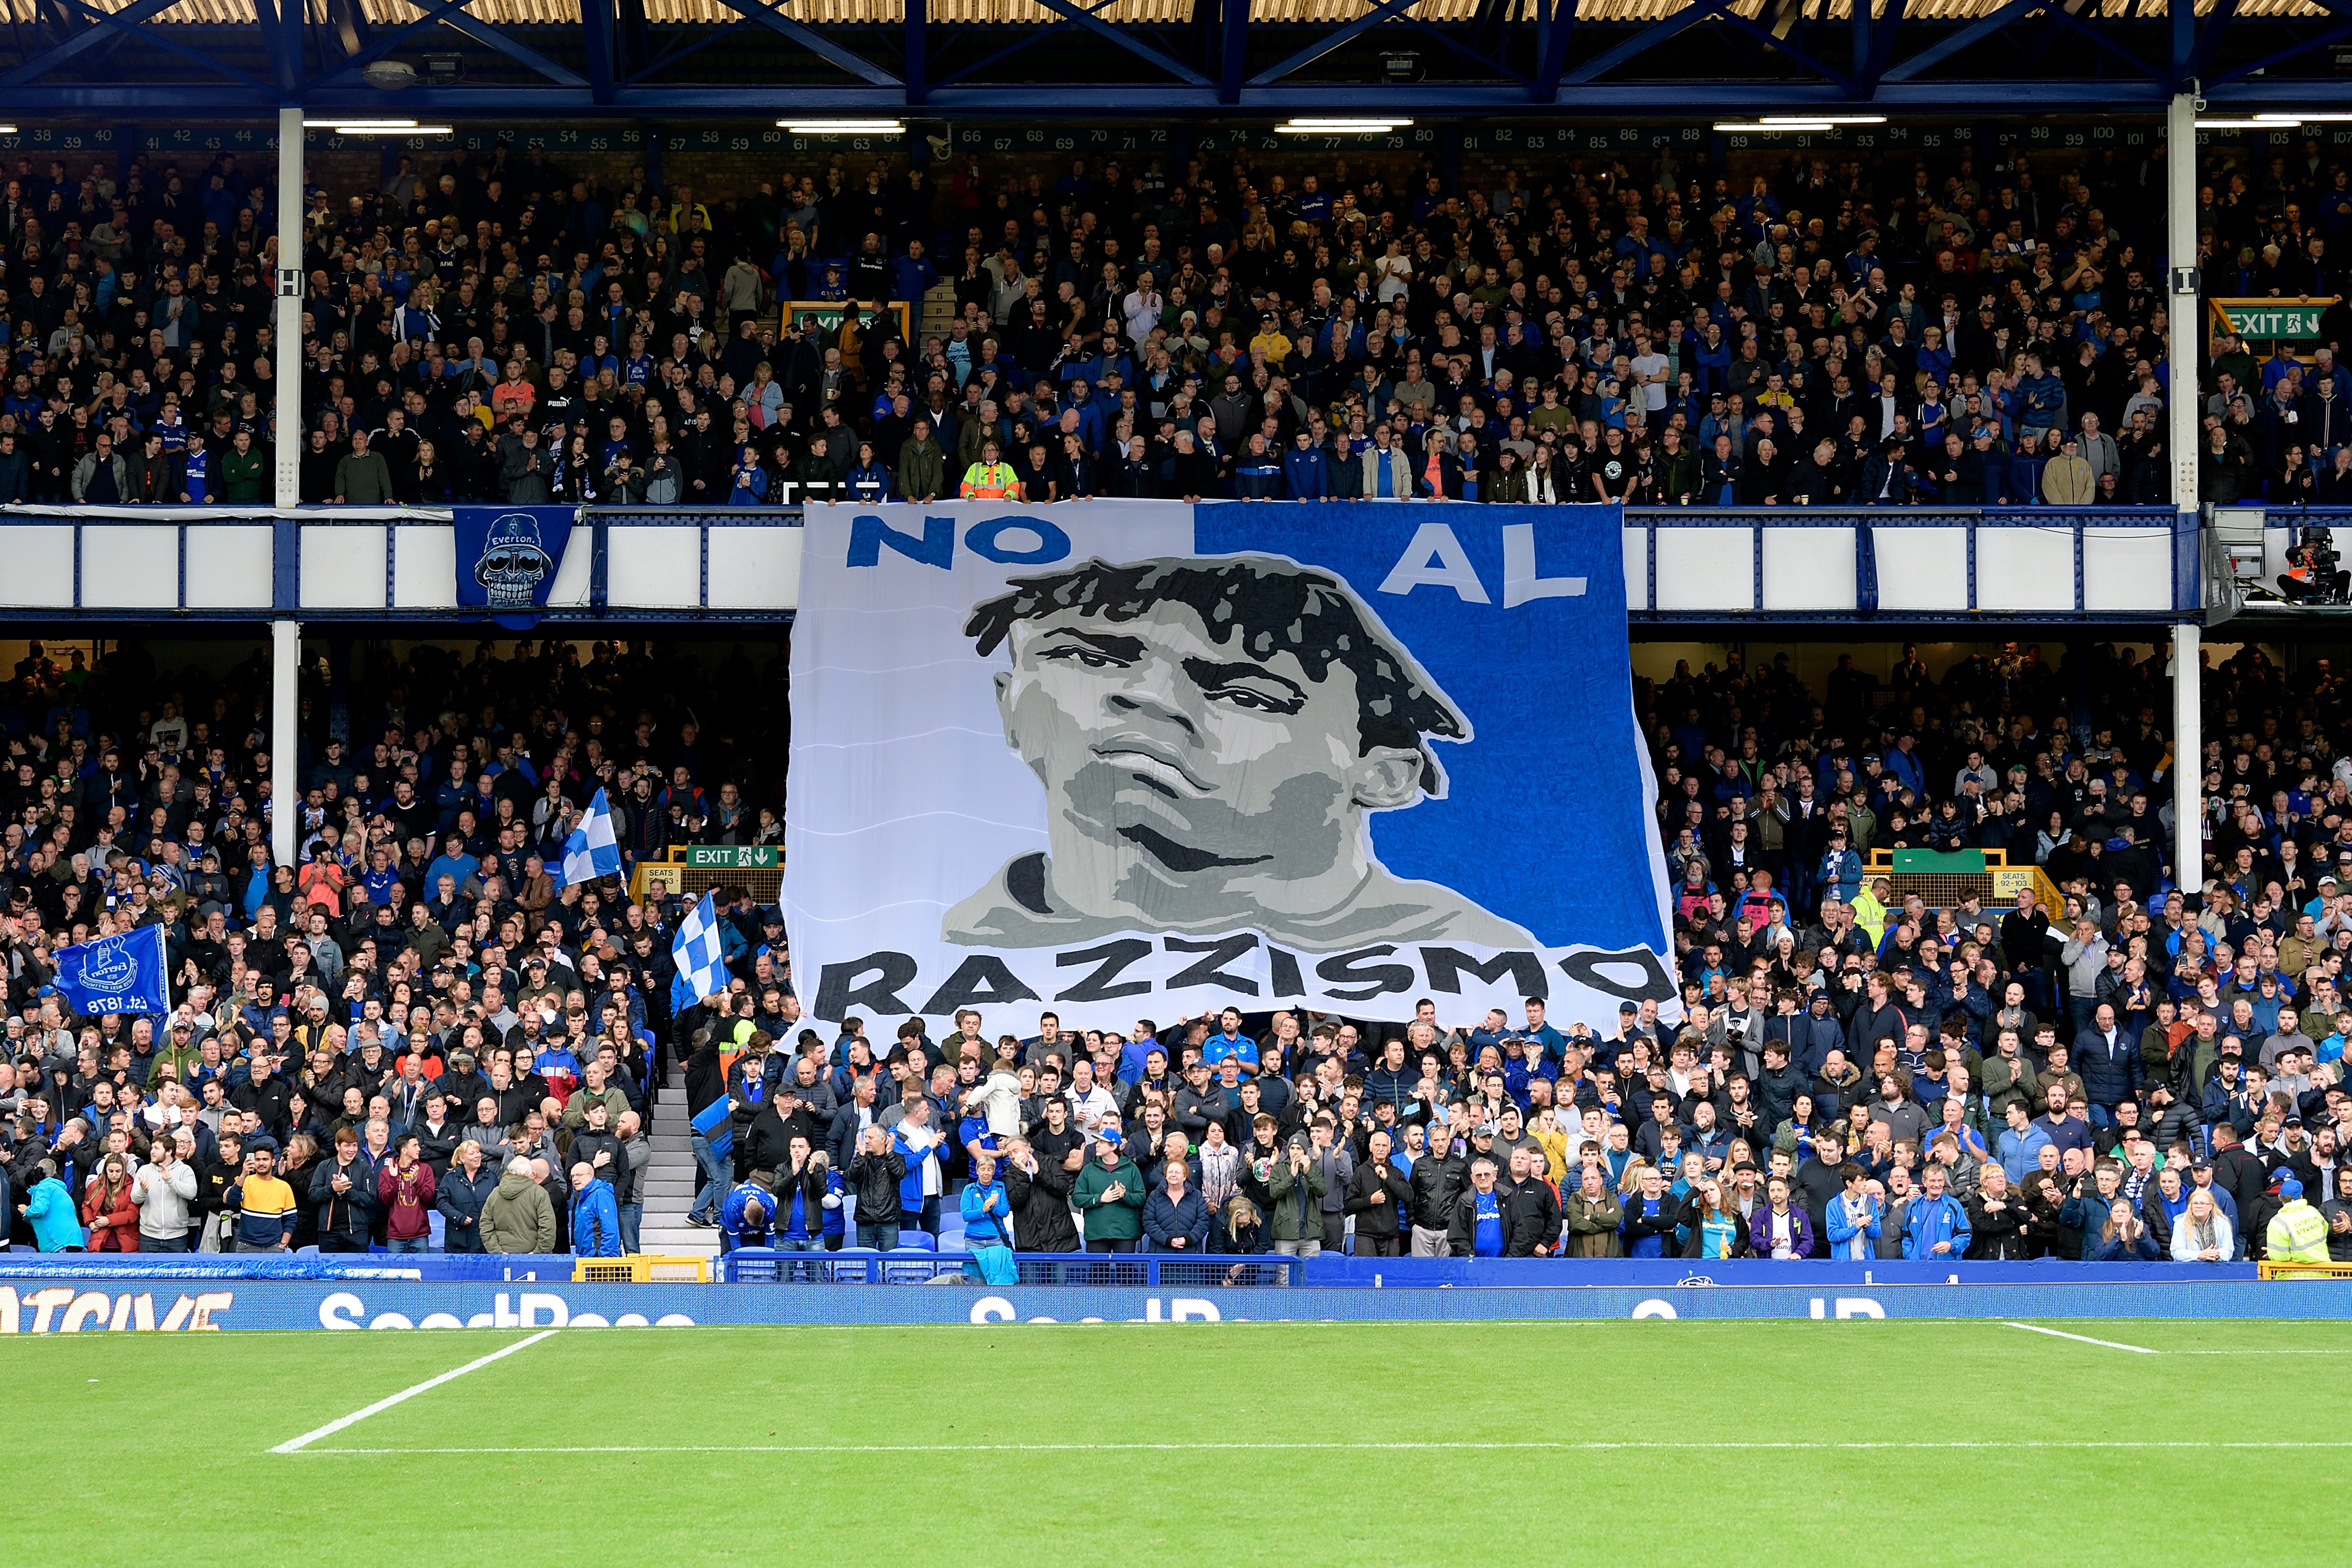 Everton FC no racism